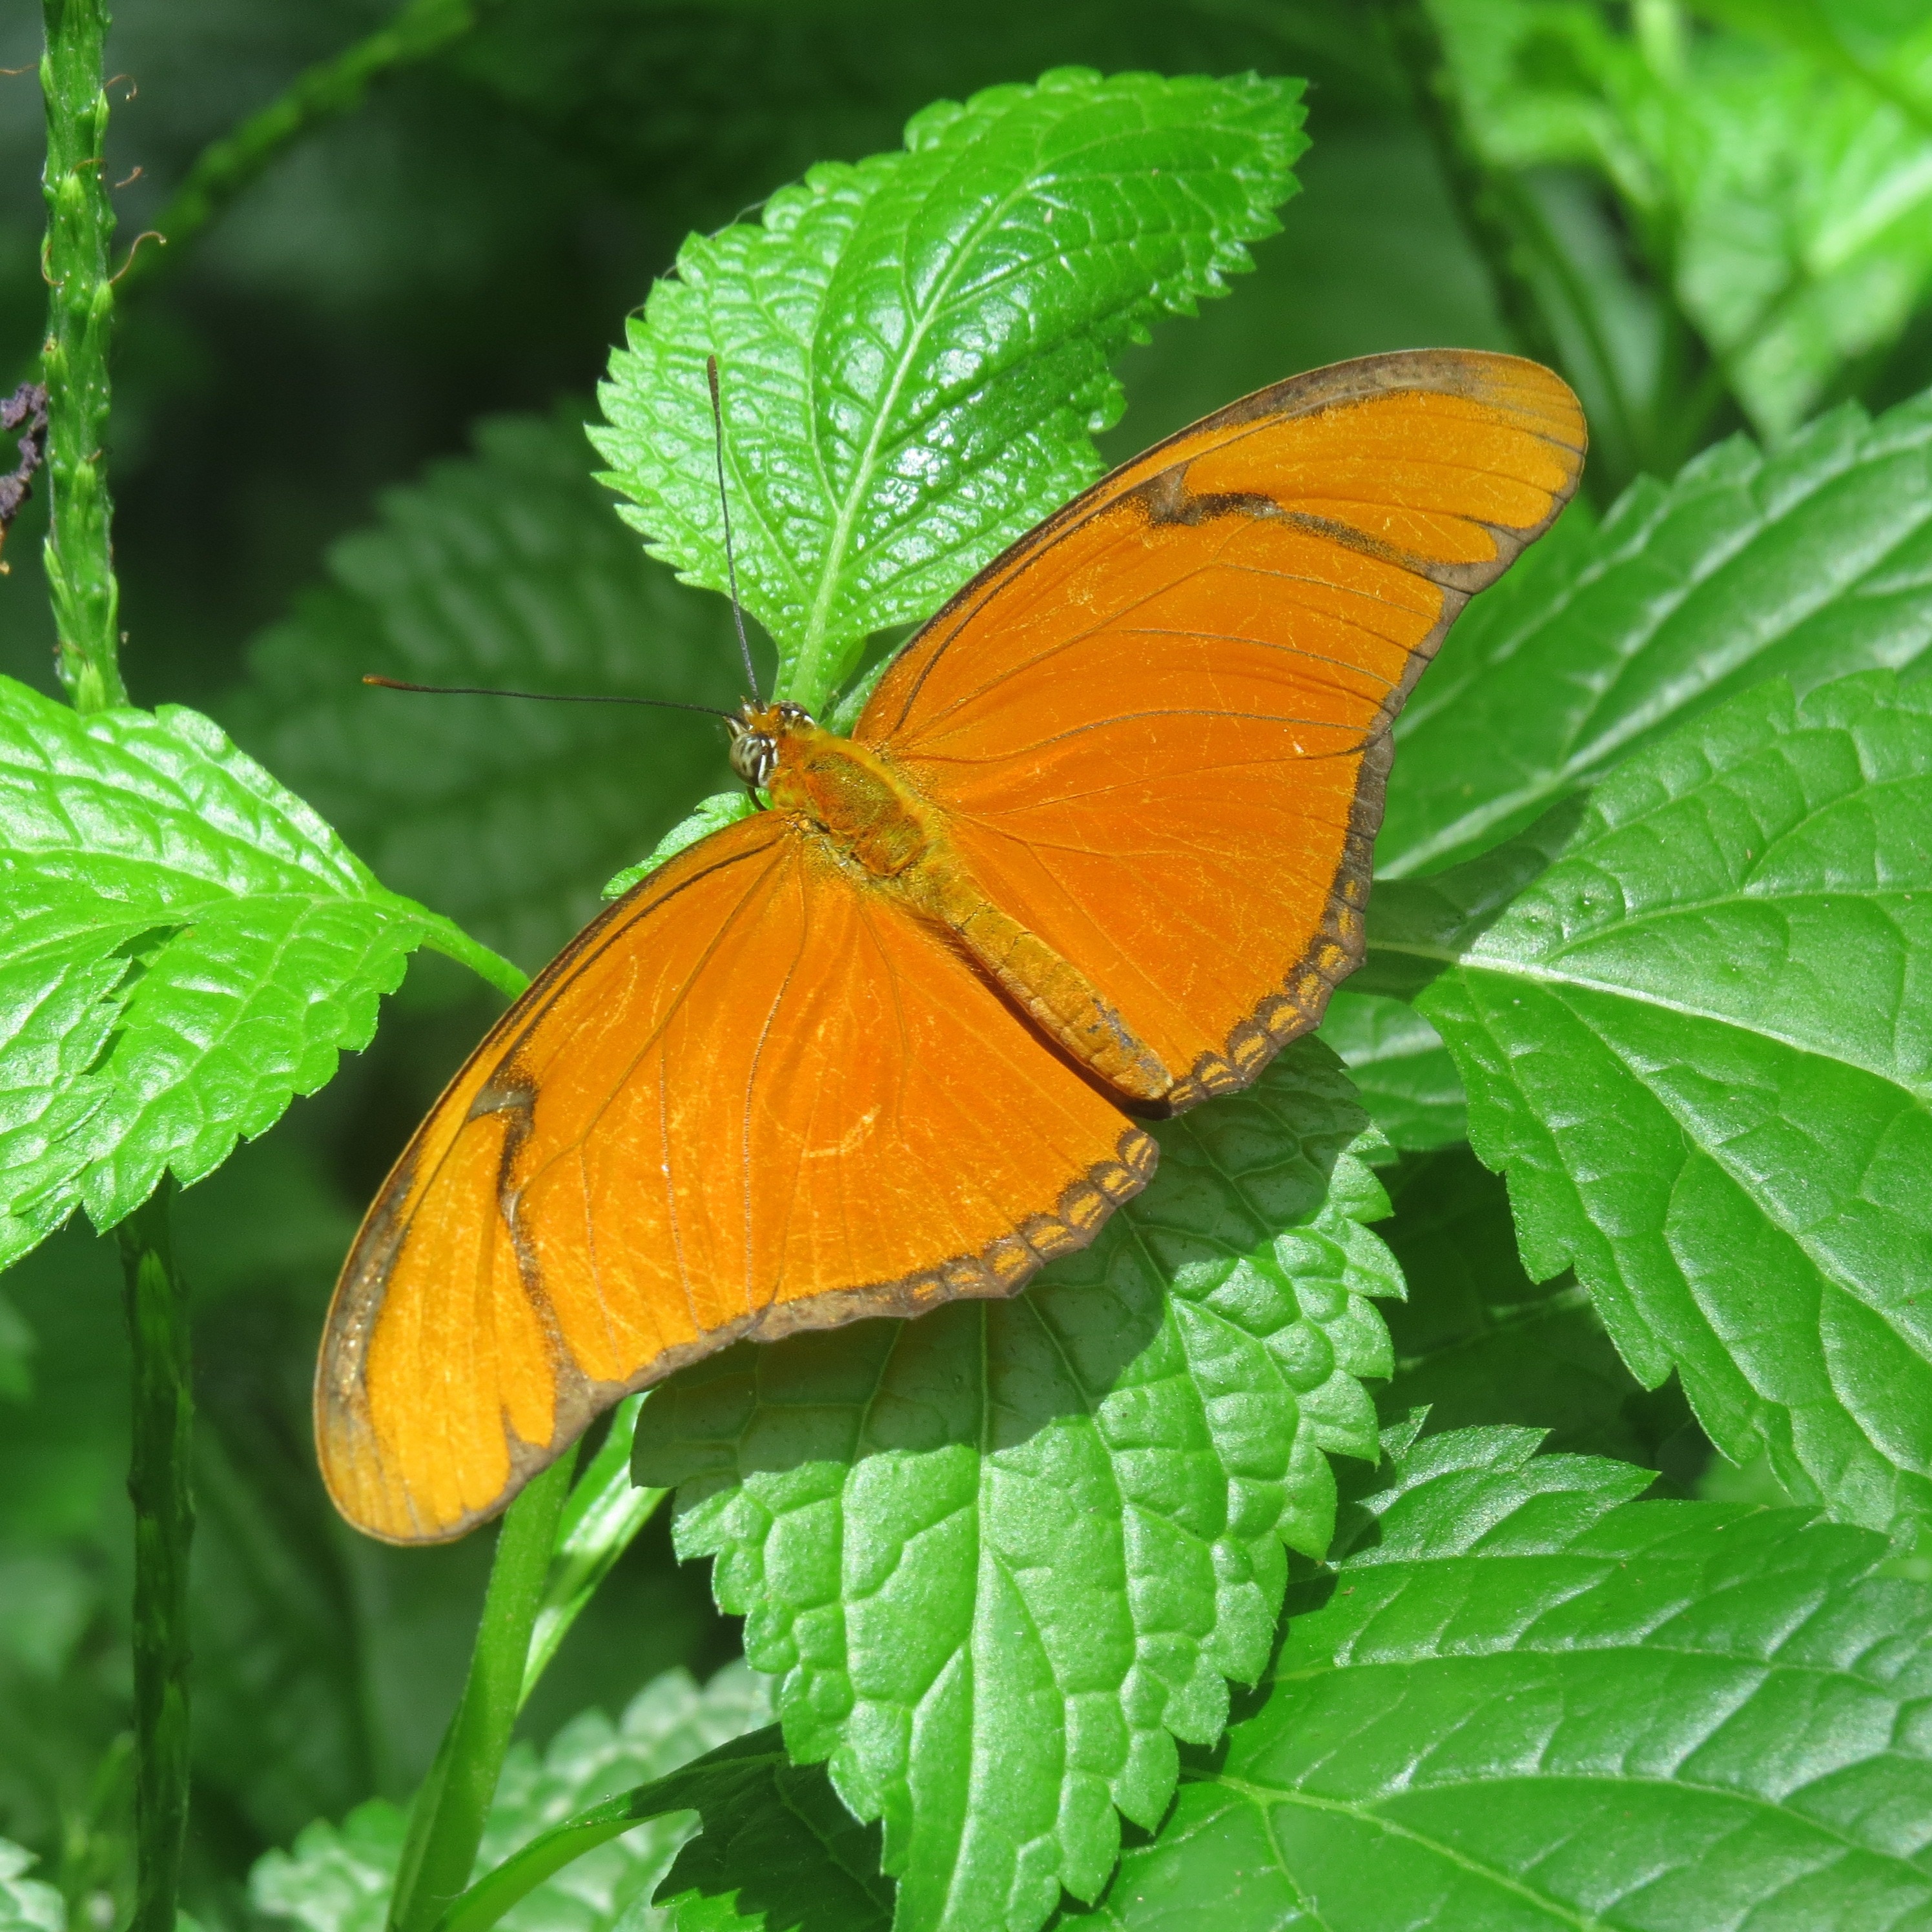 orange long wing butterfly land on green leaf plant